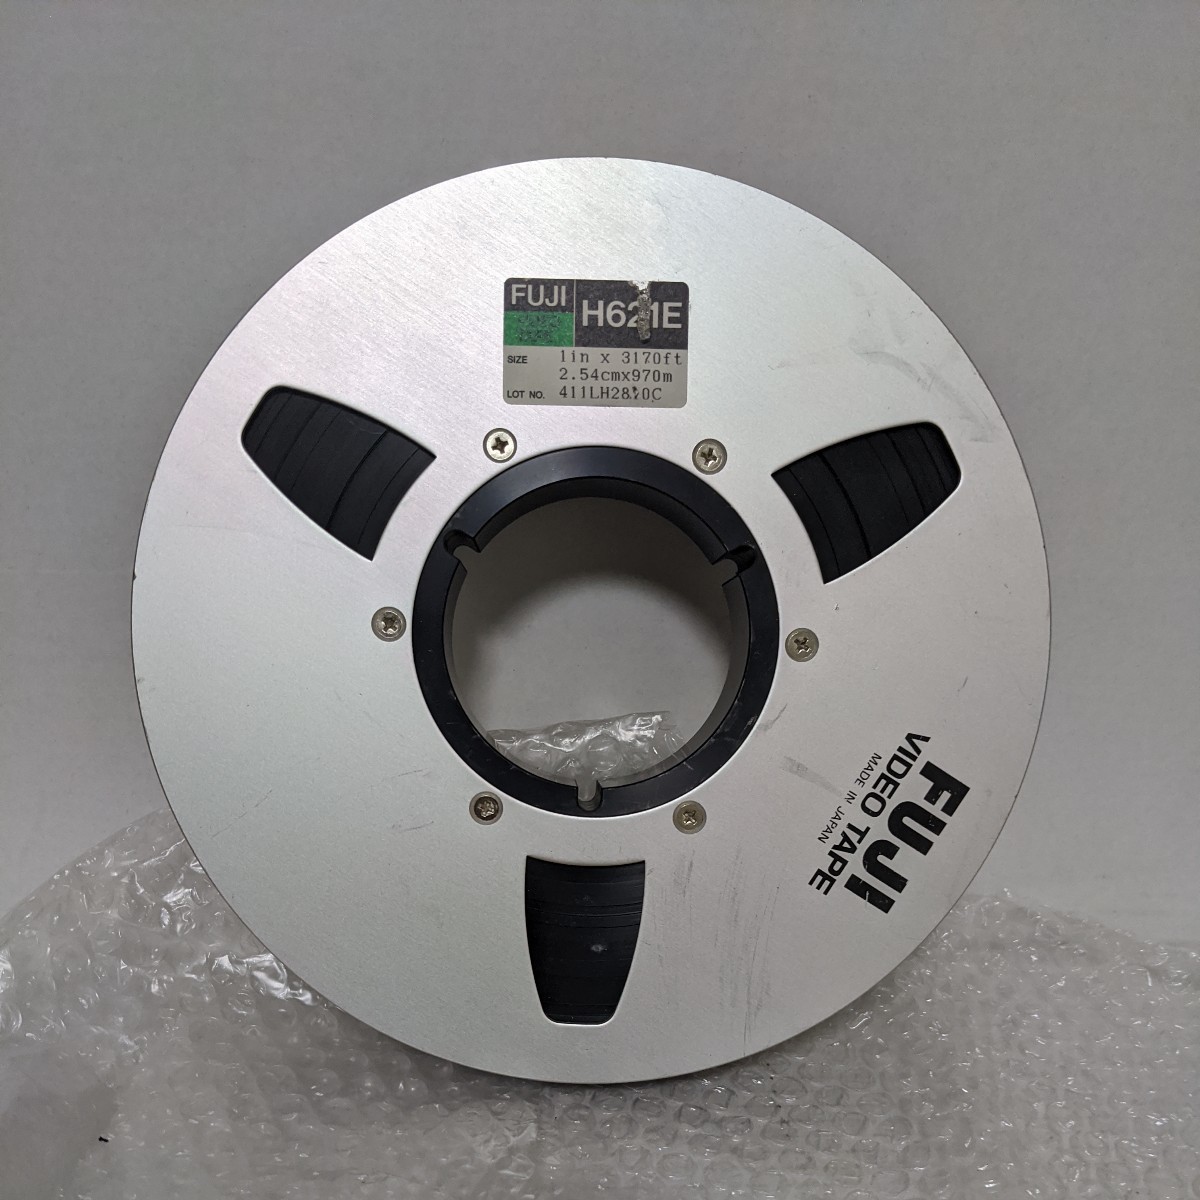 Fuji オープンリール ビデオテープ アルミリール H621 業務用映像媒体